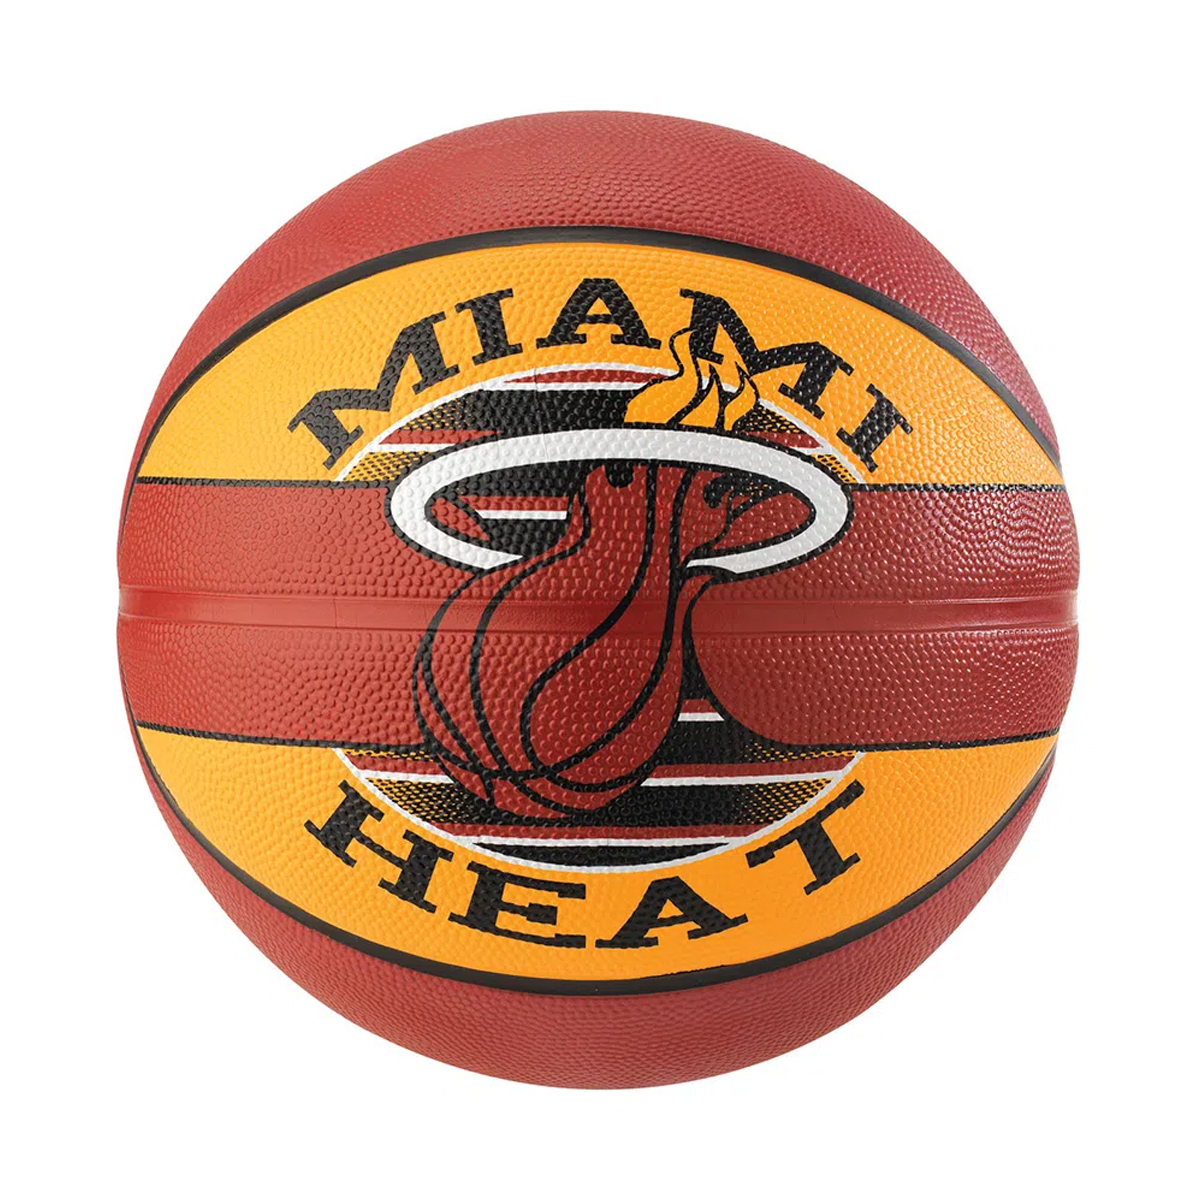 Pelota Spalding NBA Miami Heat,  image number null